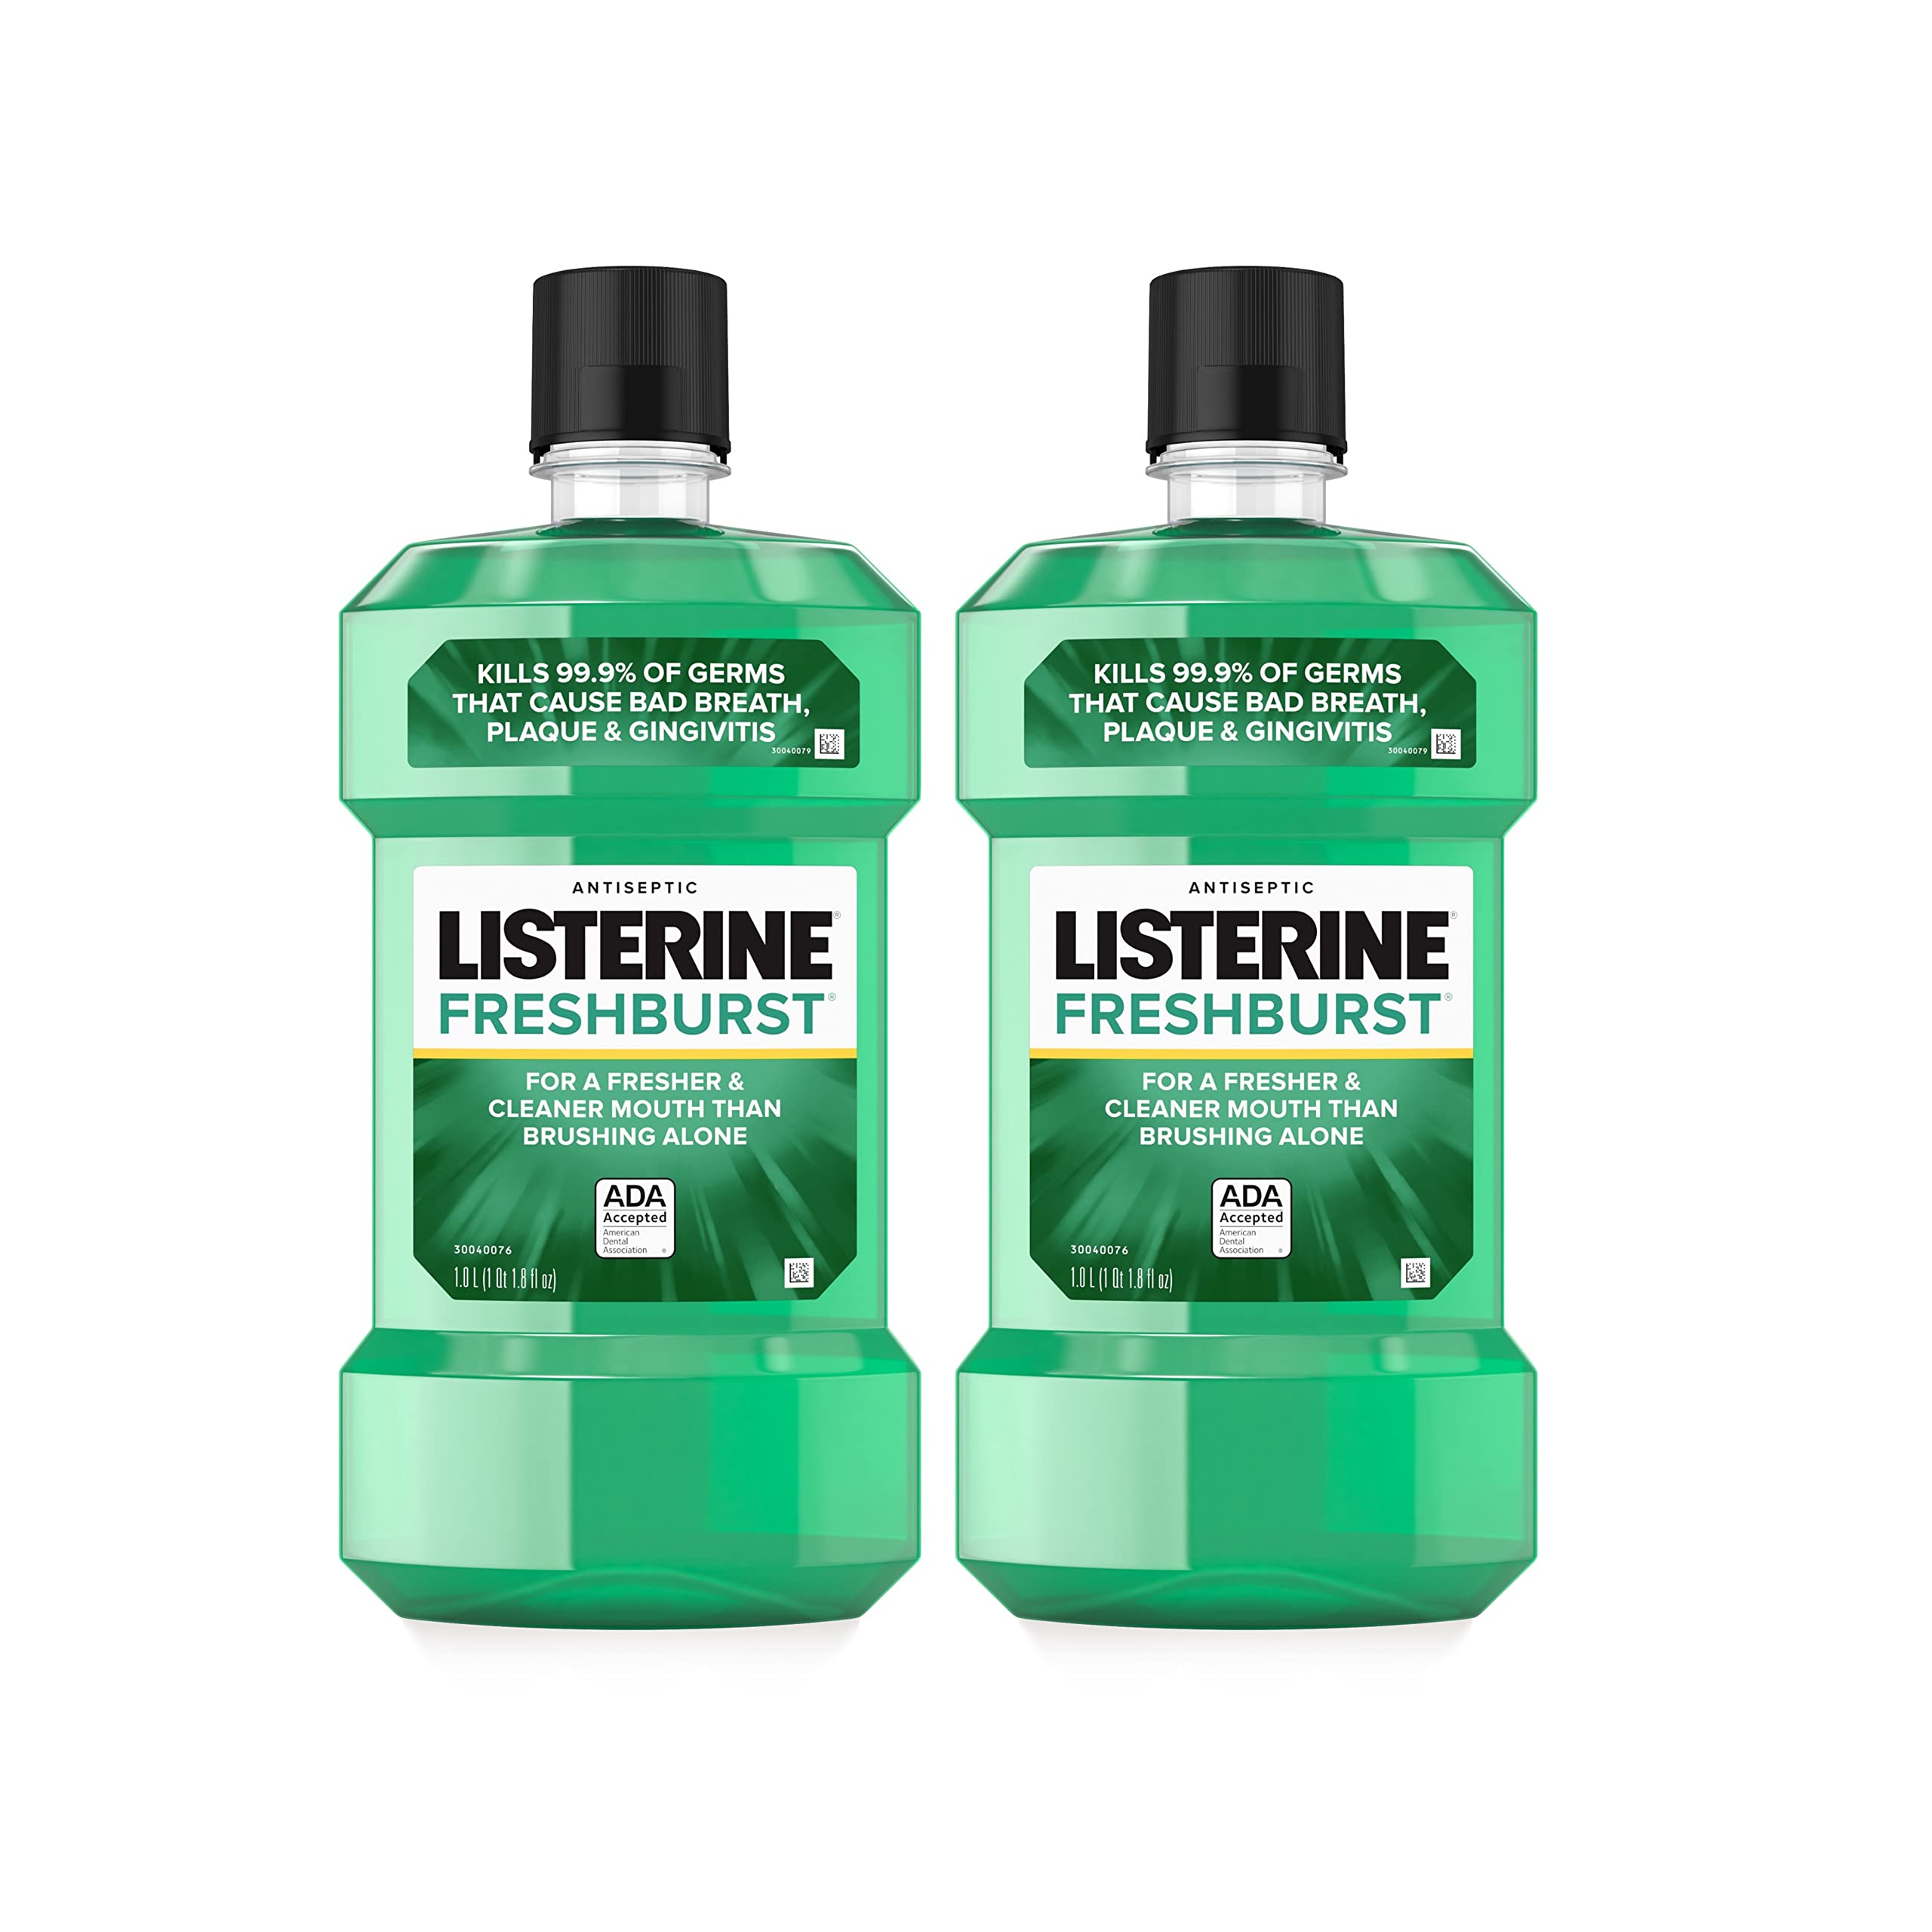 2-Pack Listerine Freshburst Antiseptic Mouthwash 1 Liter Bottles as Low as $8.54